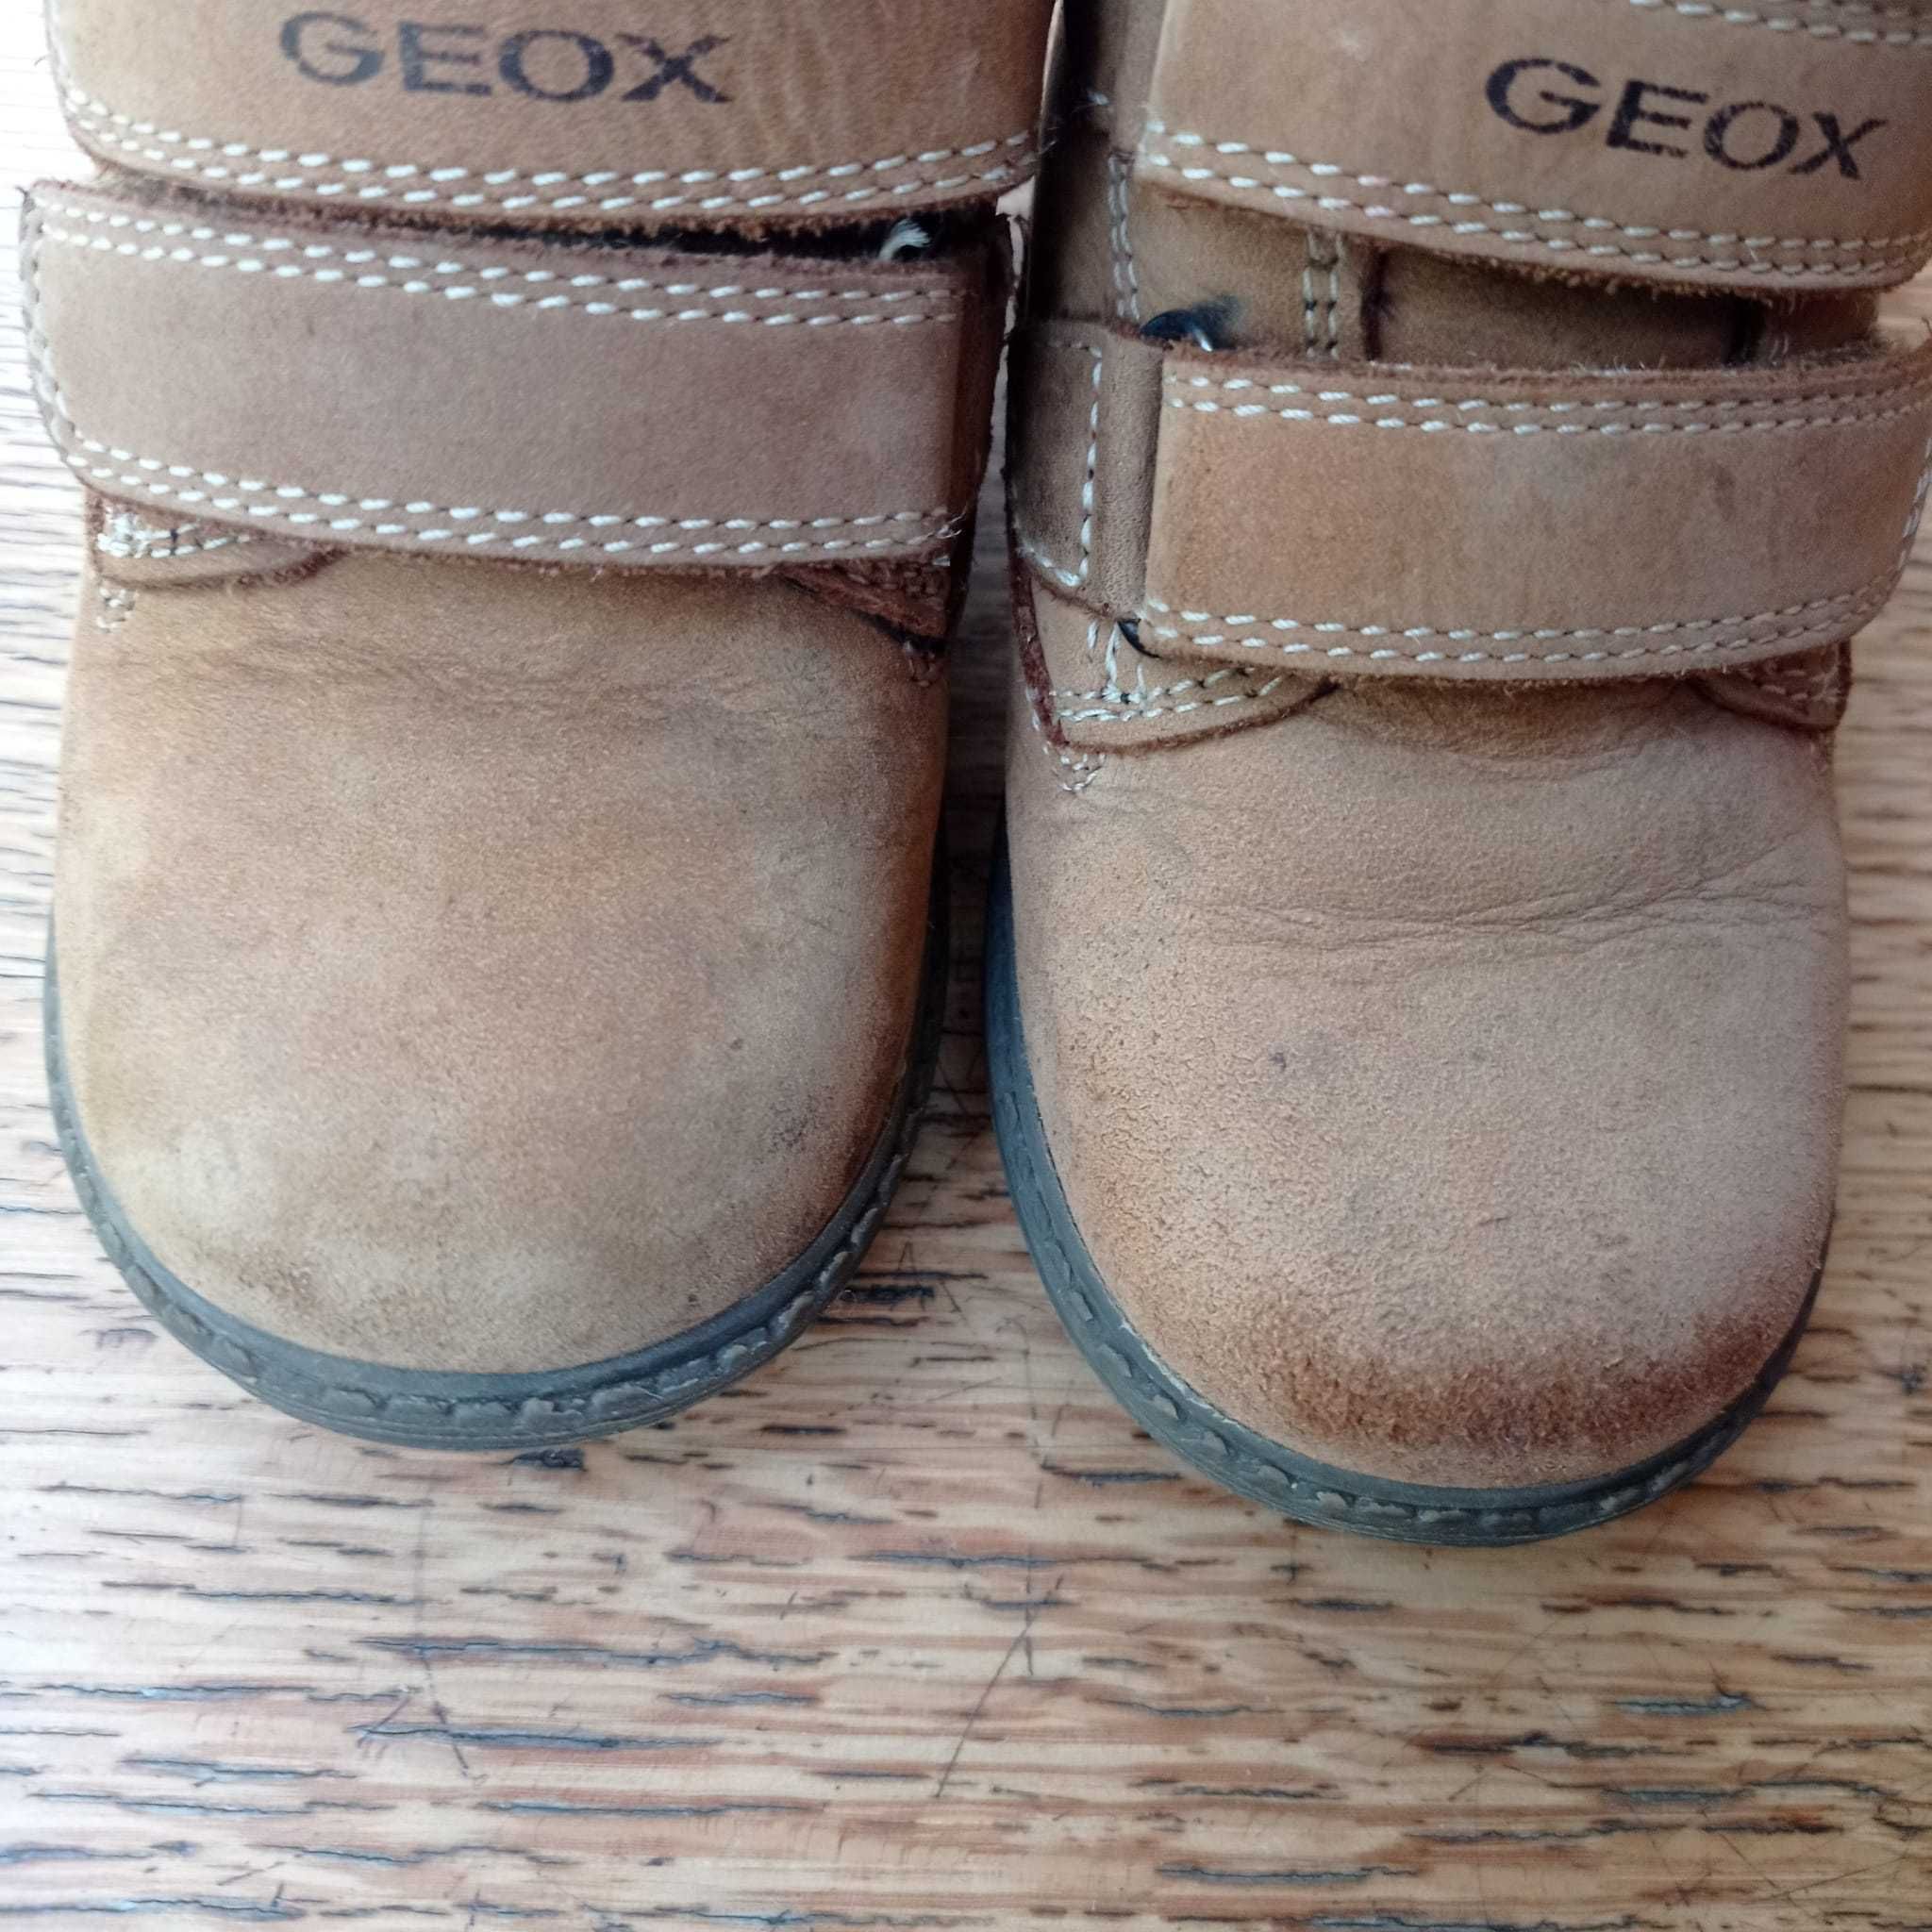 Sapatilhas / botas impermeáveis Geox tam 22